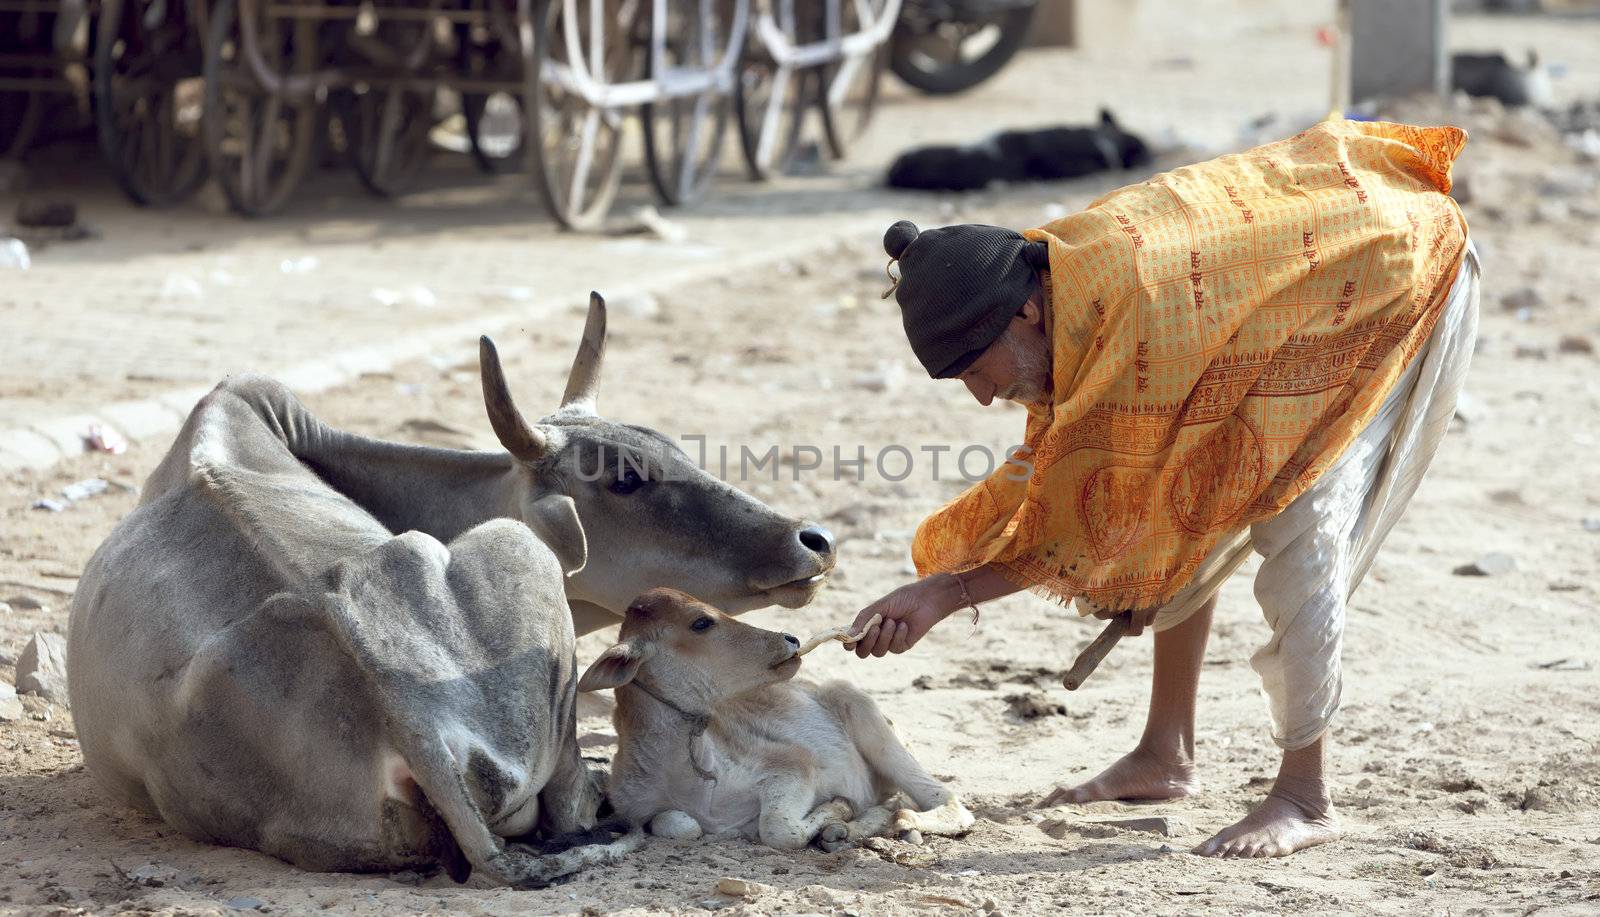 PUSHKAR, INDIA - NOVEMBER 20:  The unidentified old man wants to feed a calf bread,  November 20, 2012 in Pushkar, Rajasthan, India.